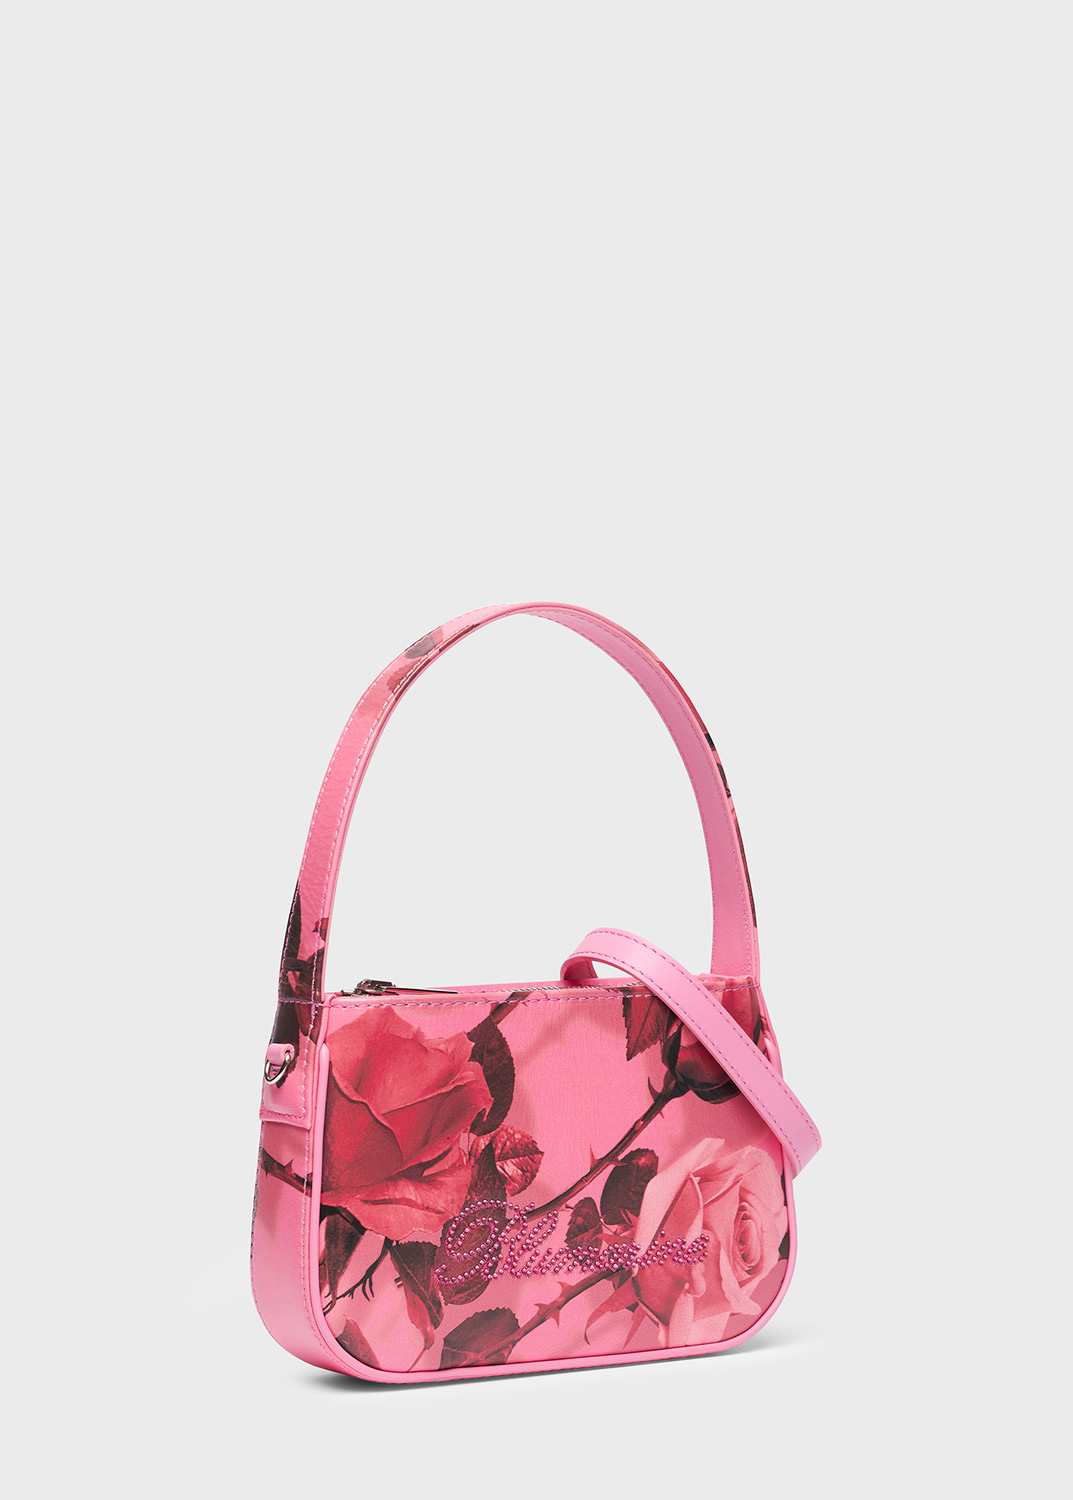 Bag in torchon rose print napa leather | Blumarine